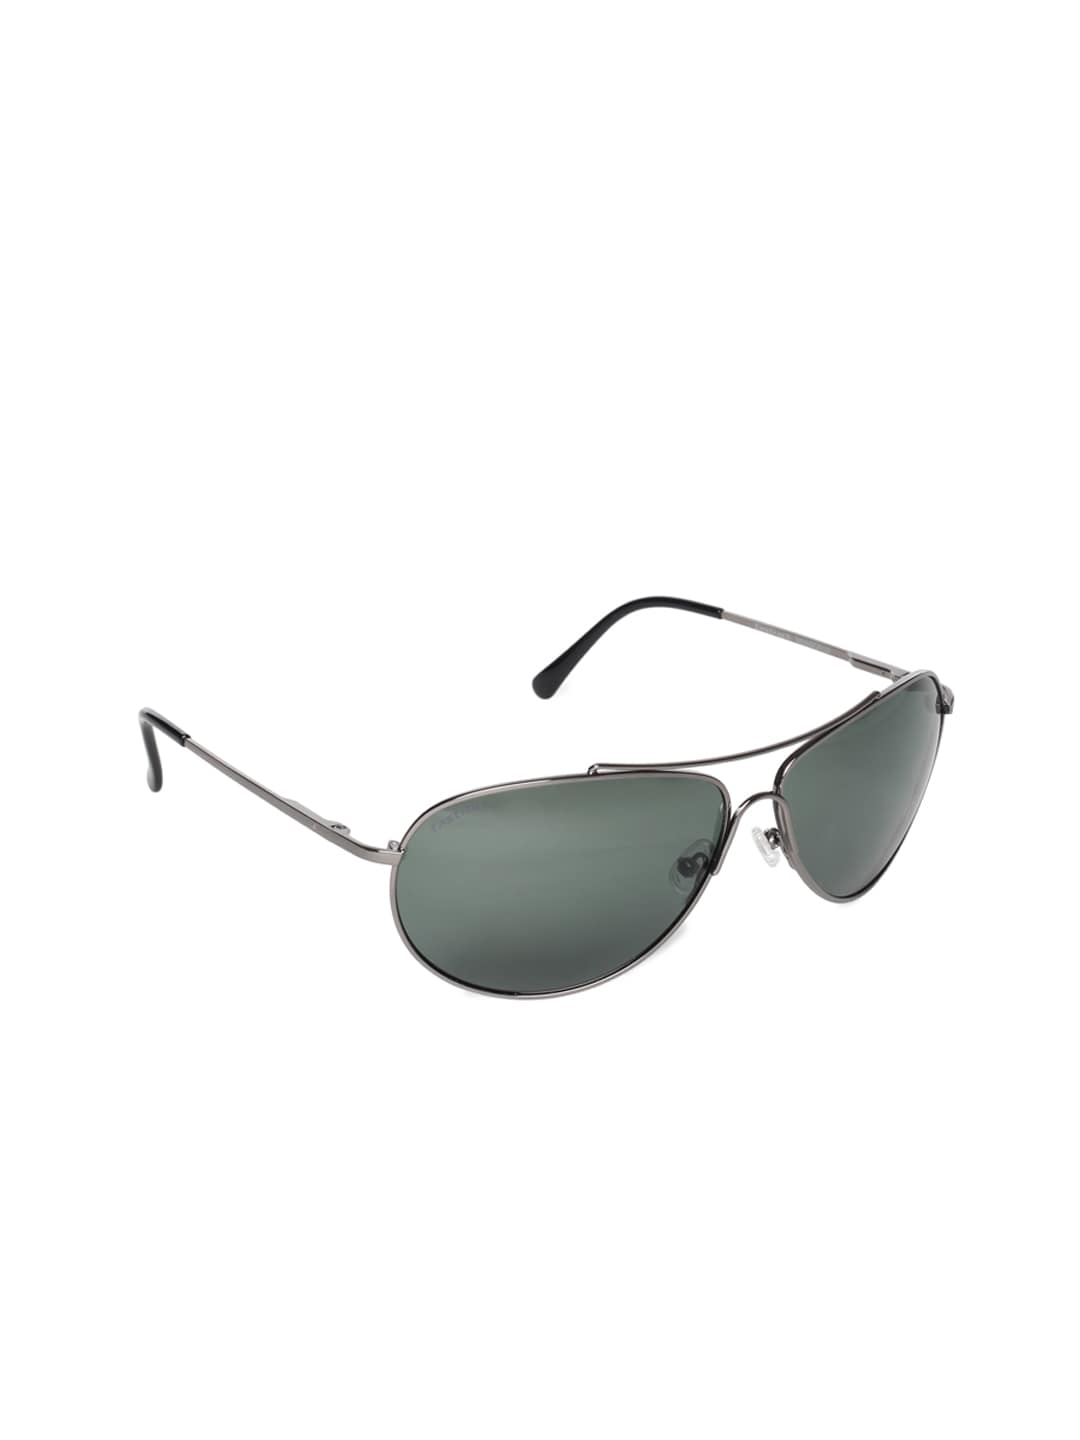 Fastrack Unisex Sport Sunglasses